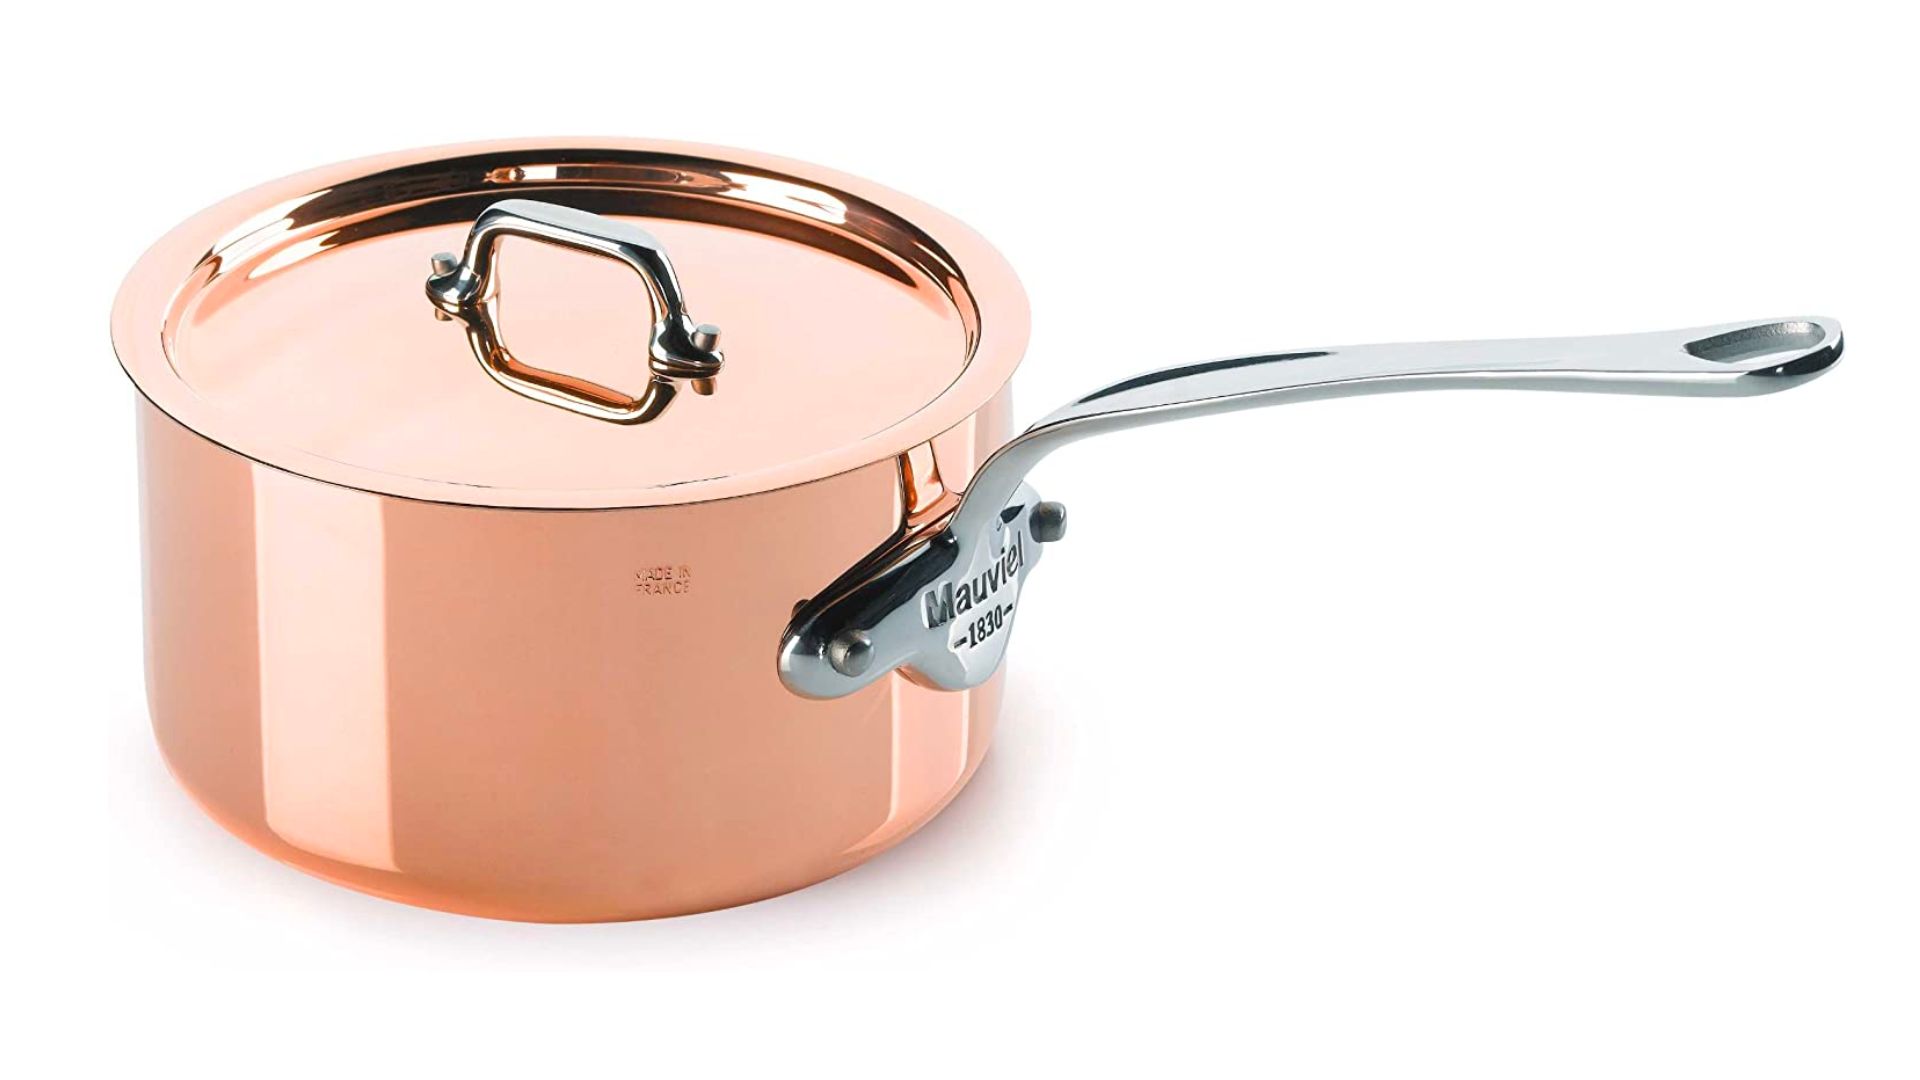 Best Copper Cookware Sets